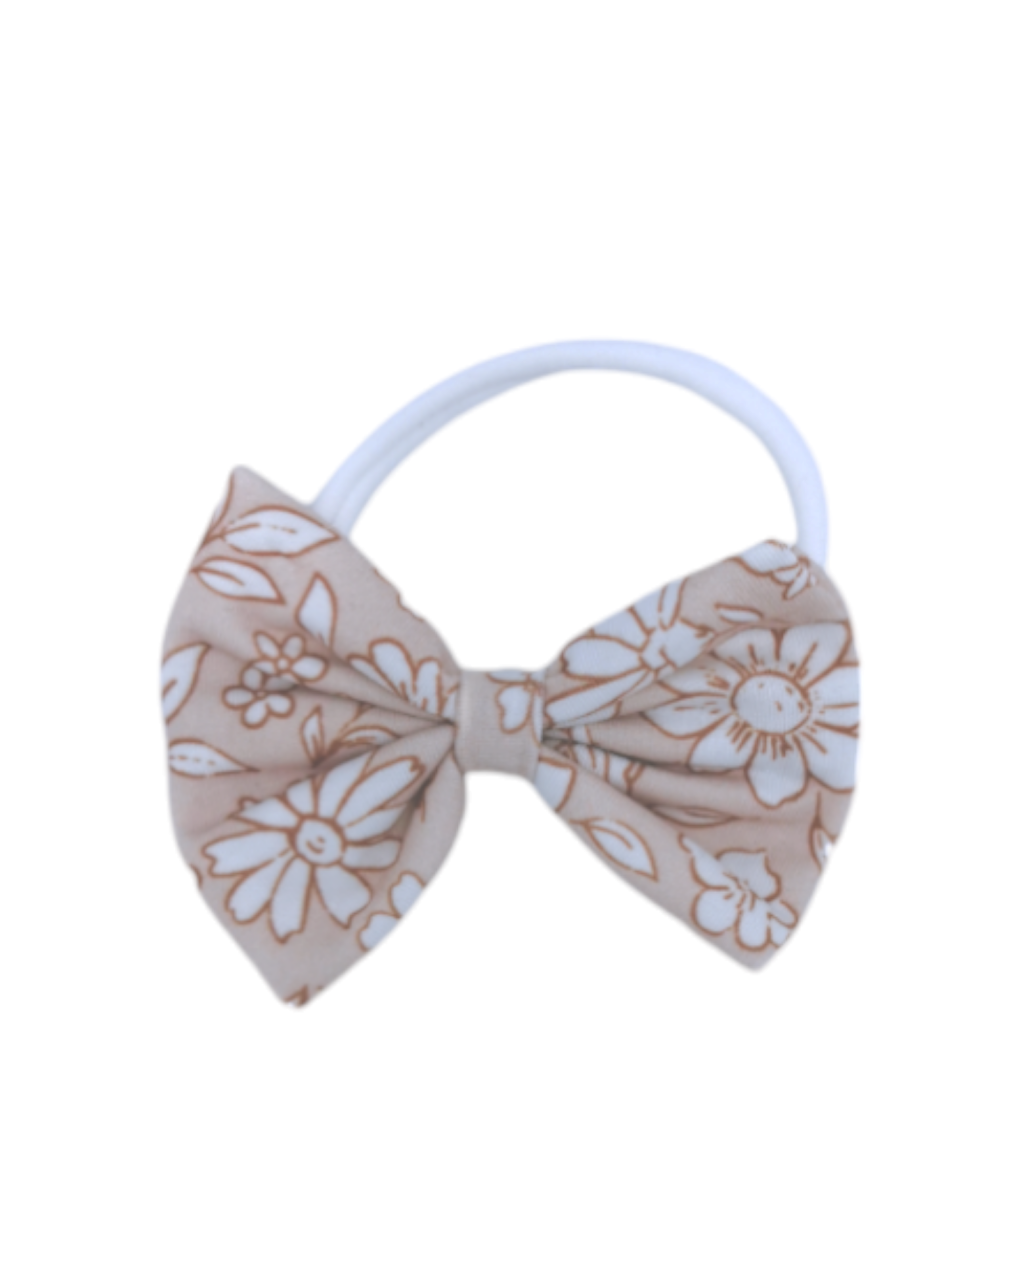 3.5 inch Beige Floral Bow Headband - Betty Brown Boutique Ltd